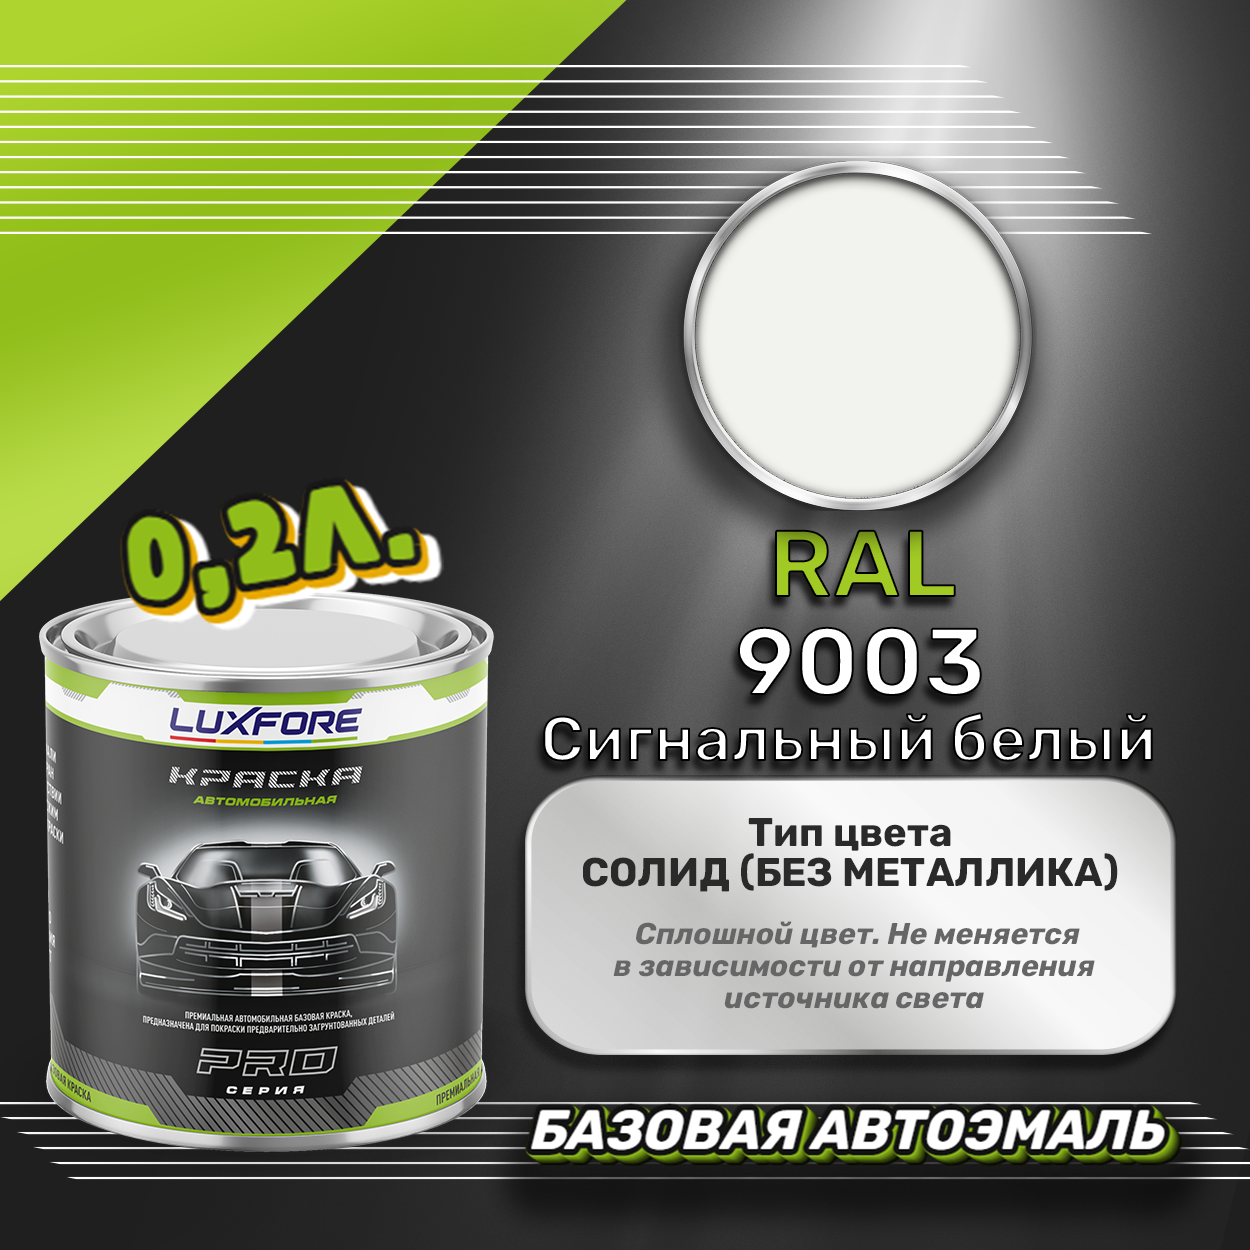 Luxfore краска базовая эмаль RAL 9003 Сигнальный белый 200 мл